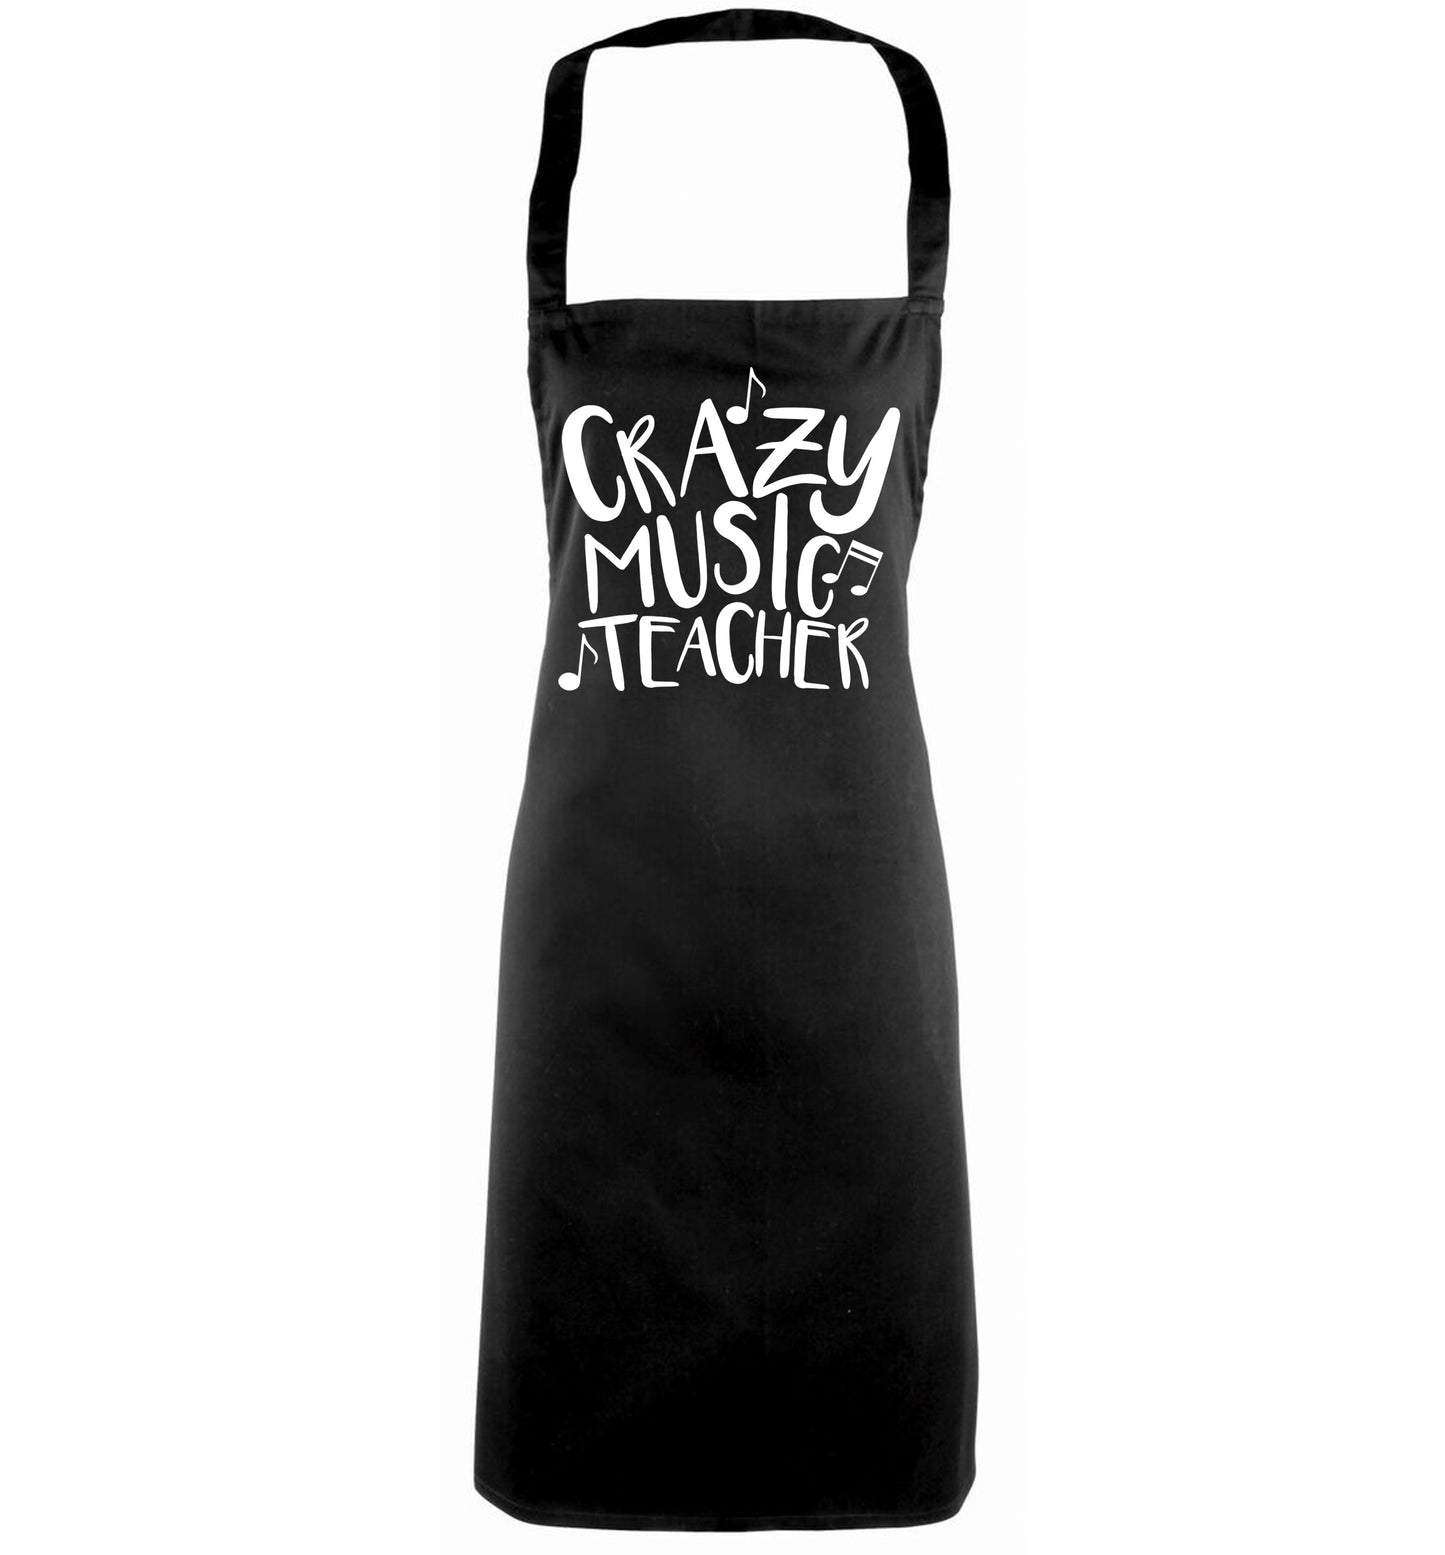 Crazy music teacher black apron